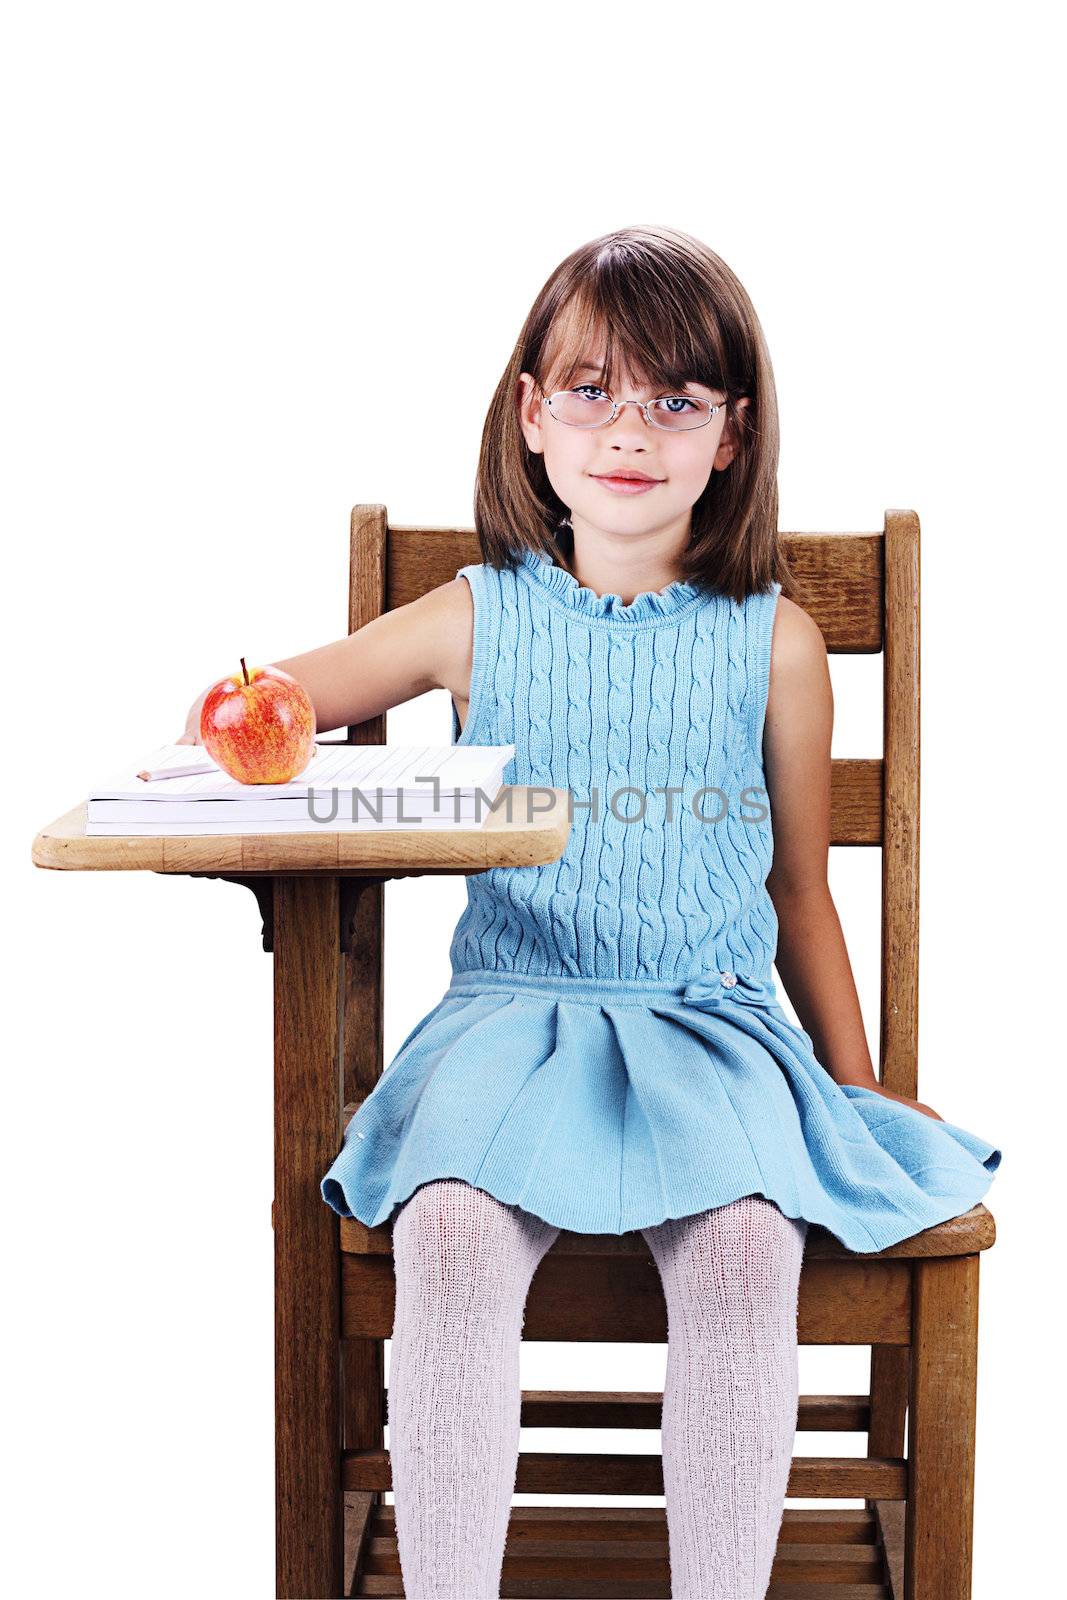 Child at School Desk by StephanieFrey